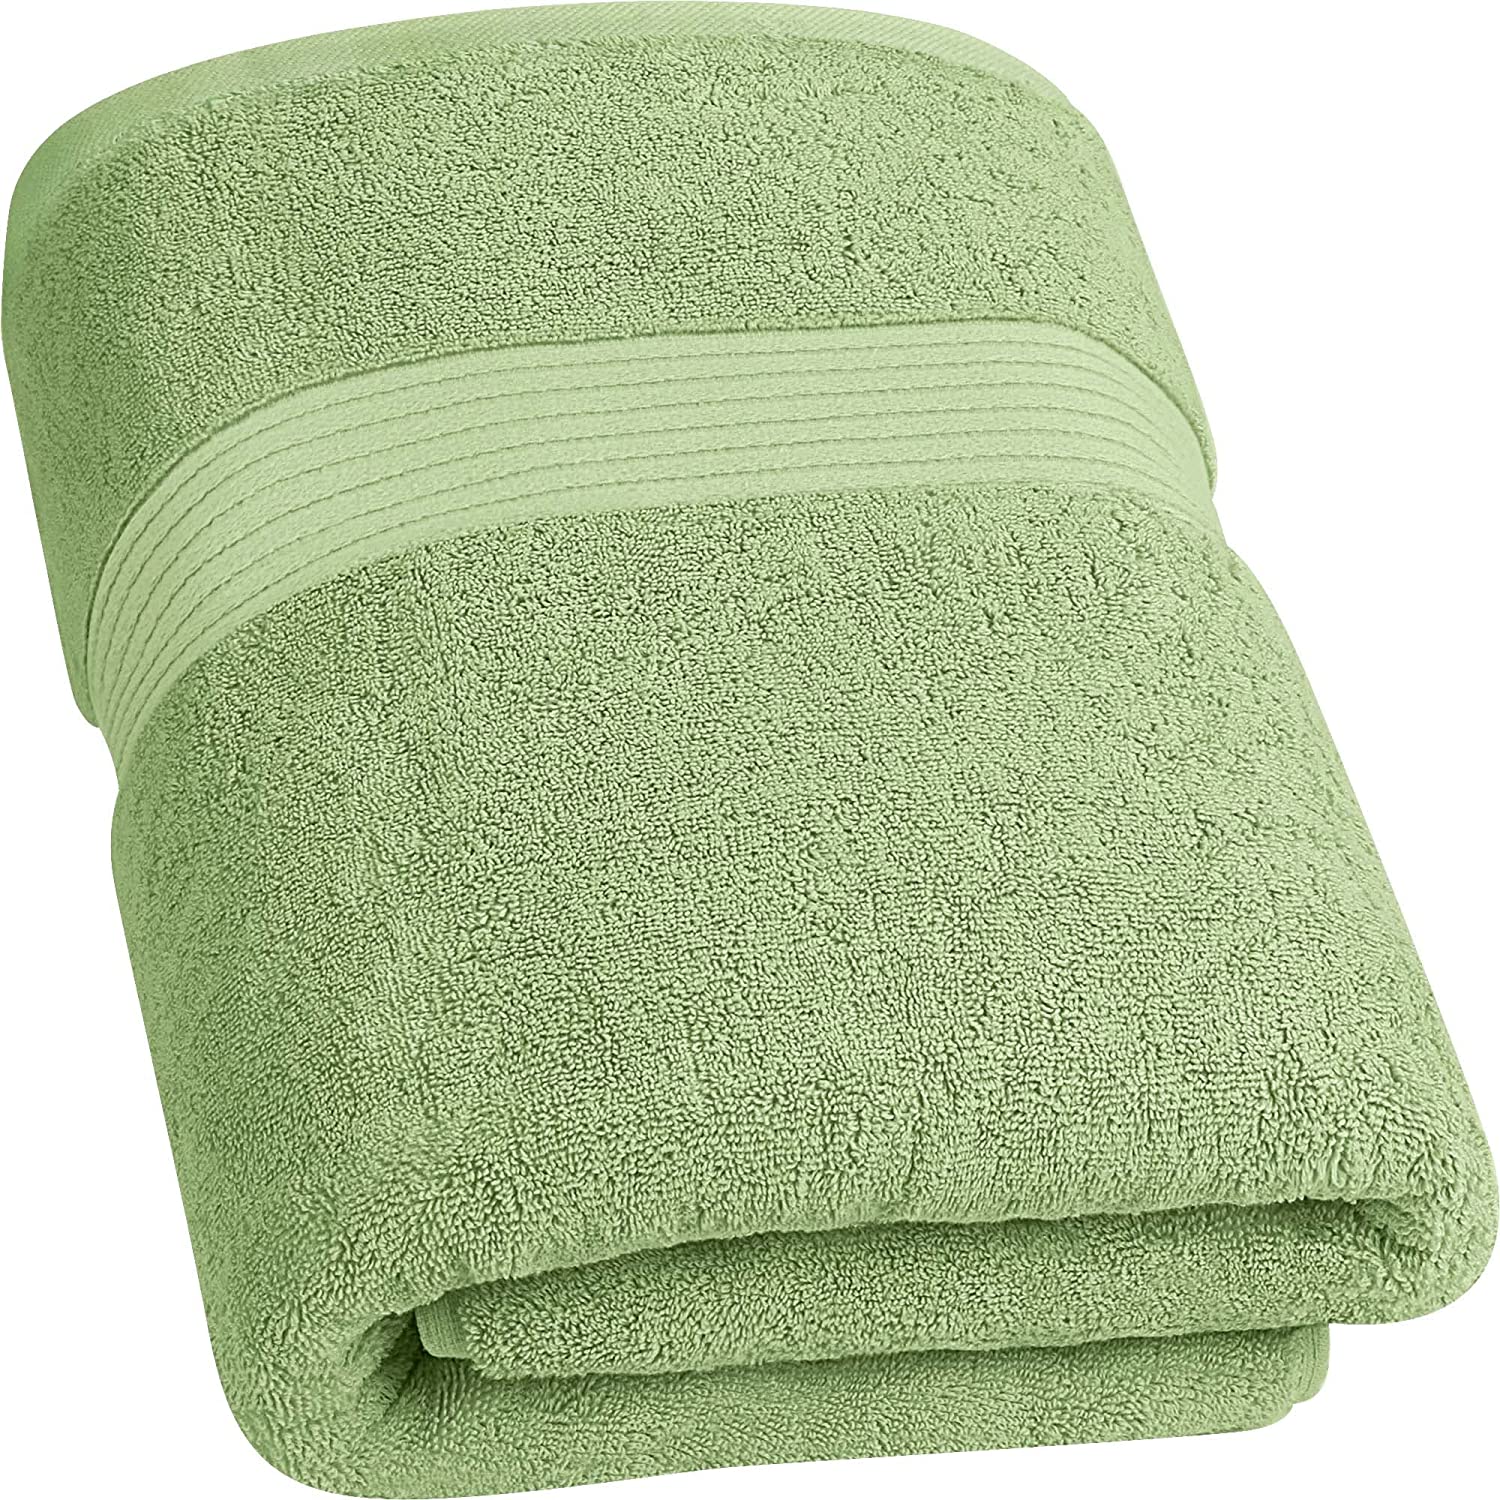  Utopia Towels - Luxurious Jumbo Bath Sheet 2 Piece